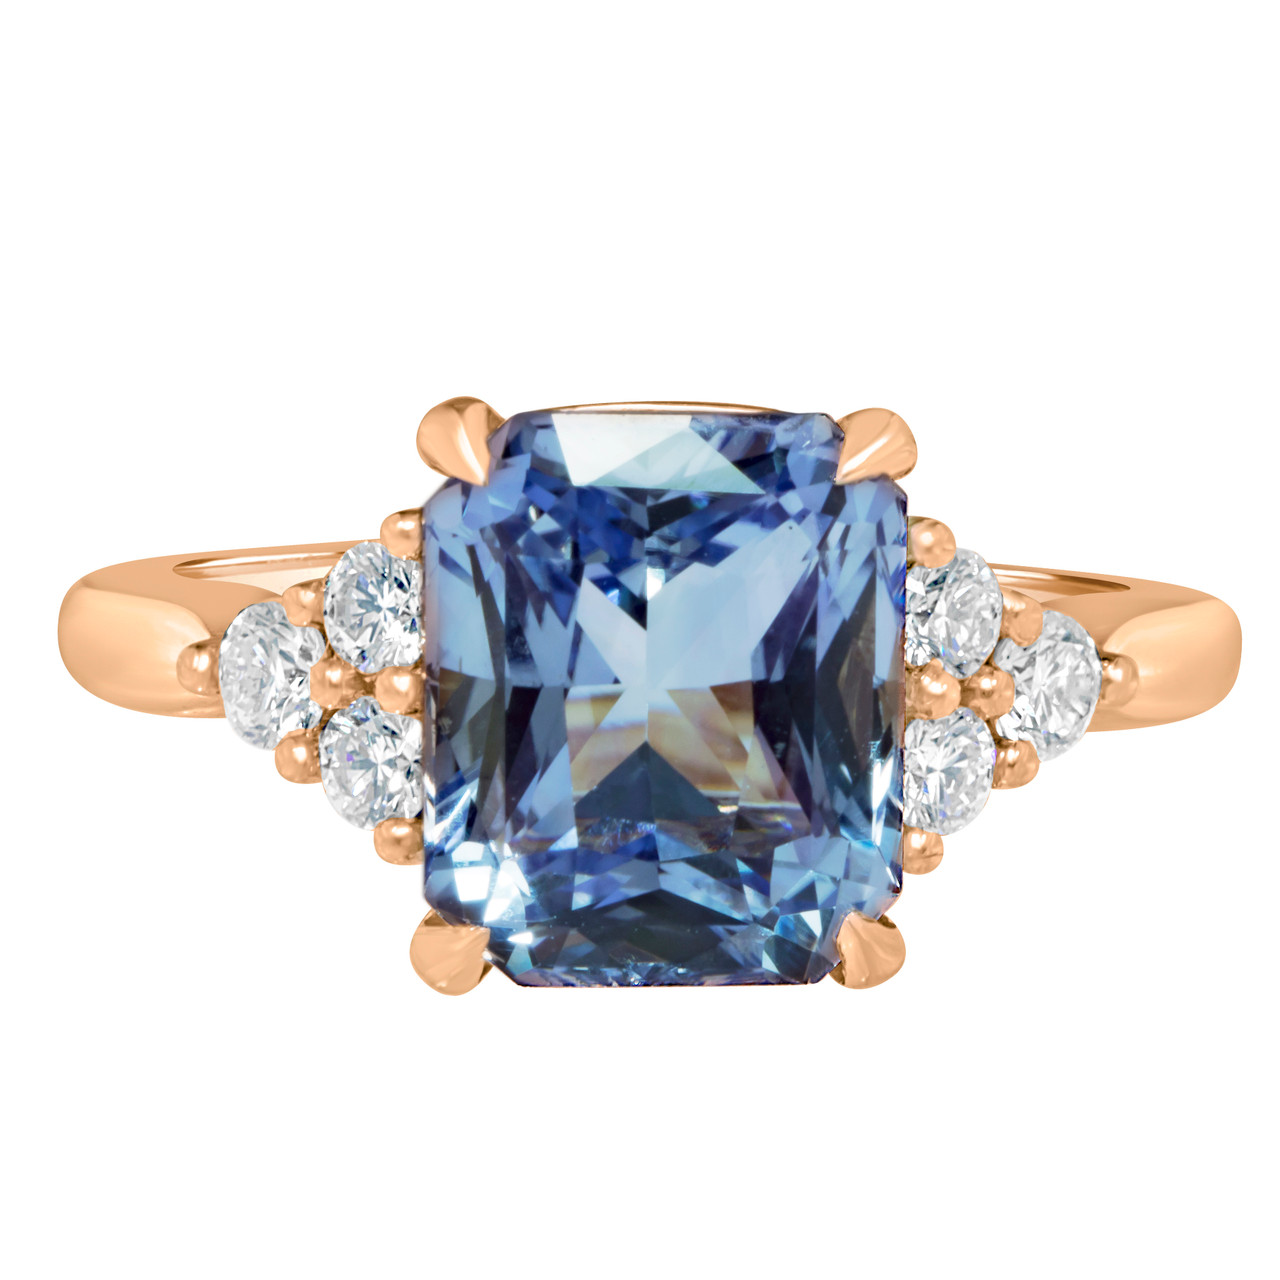 6.7ct Radiant Cut Light Blue Sapphire Engagement Ring | SayaBling Jewelry